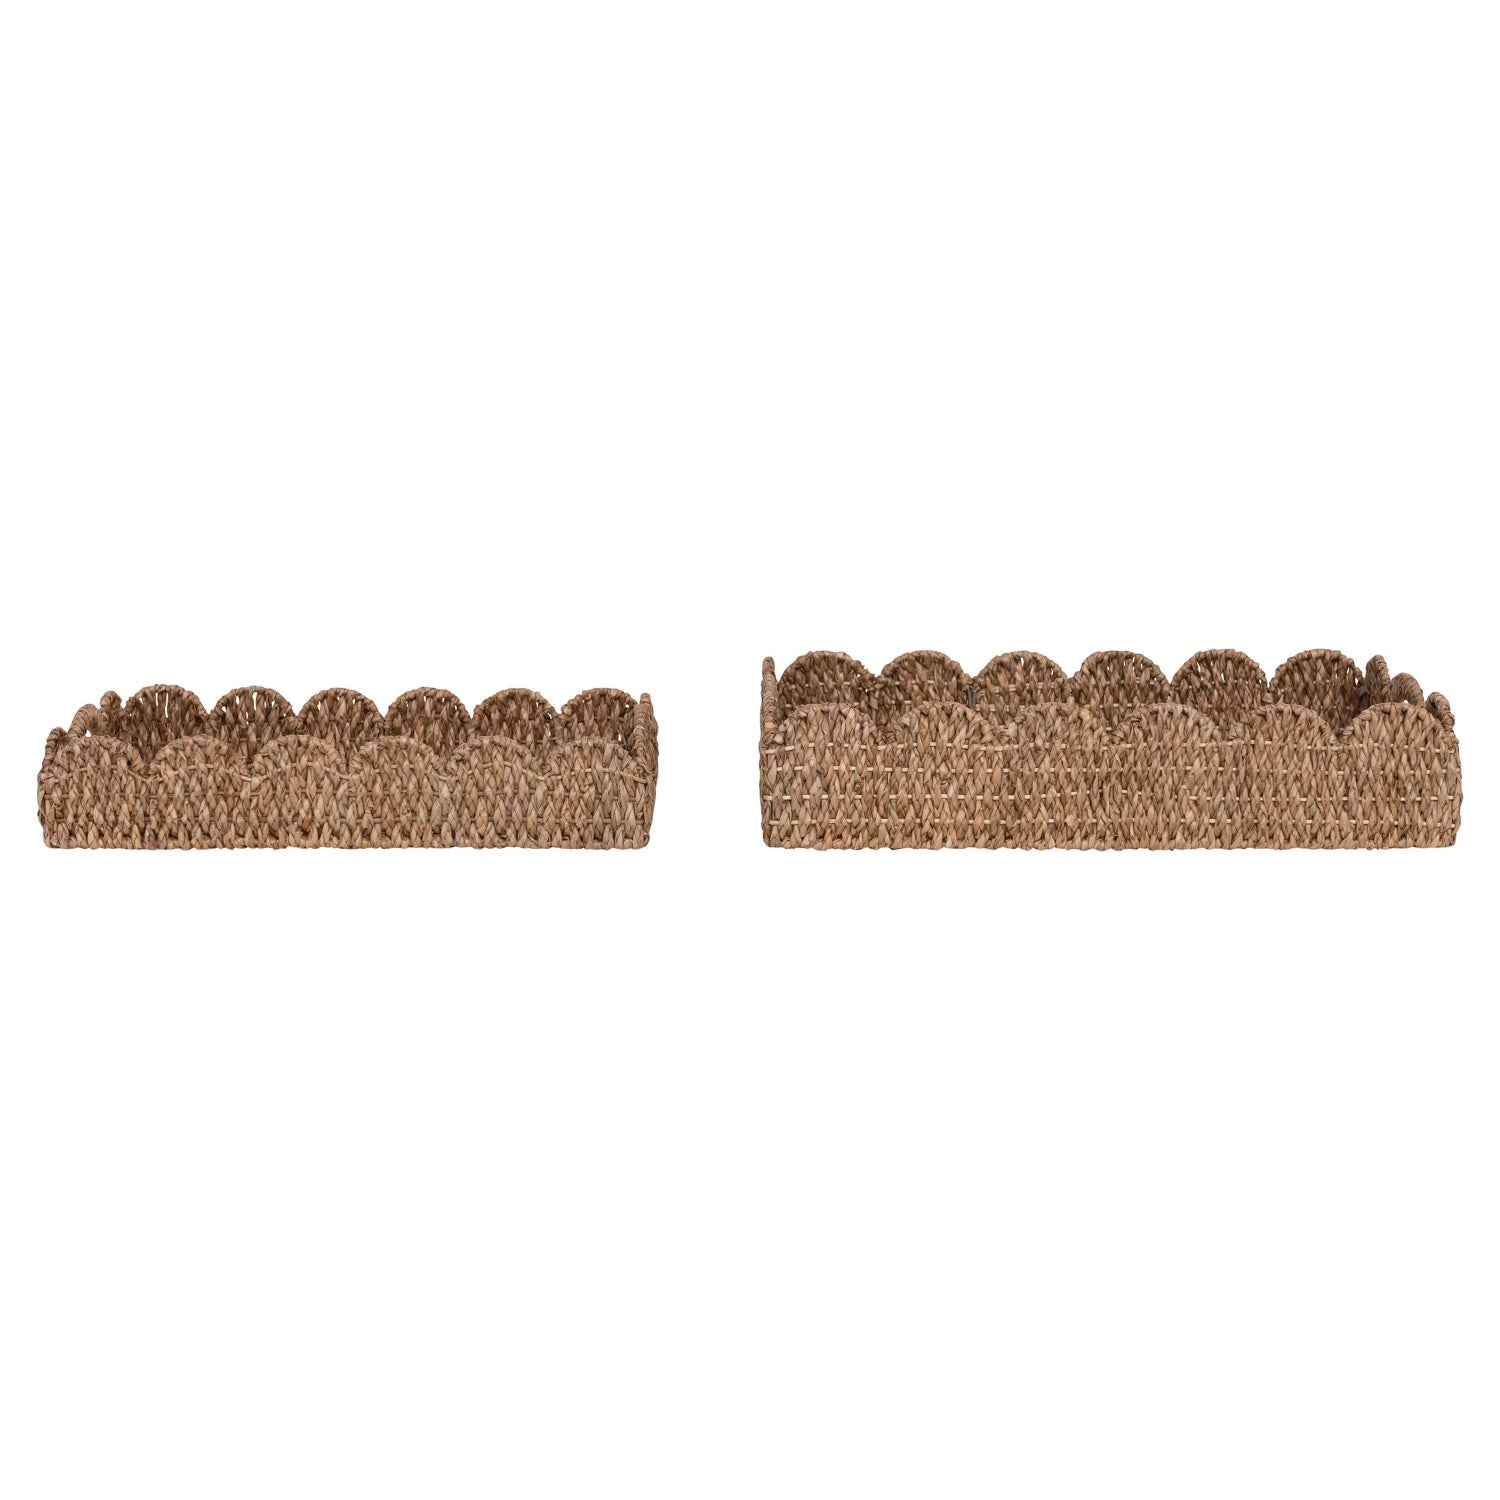 Decorative Braided Bankuan Trays w/ Handles & Scalloped Edge